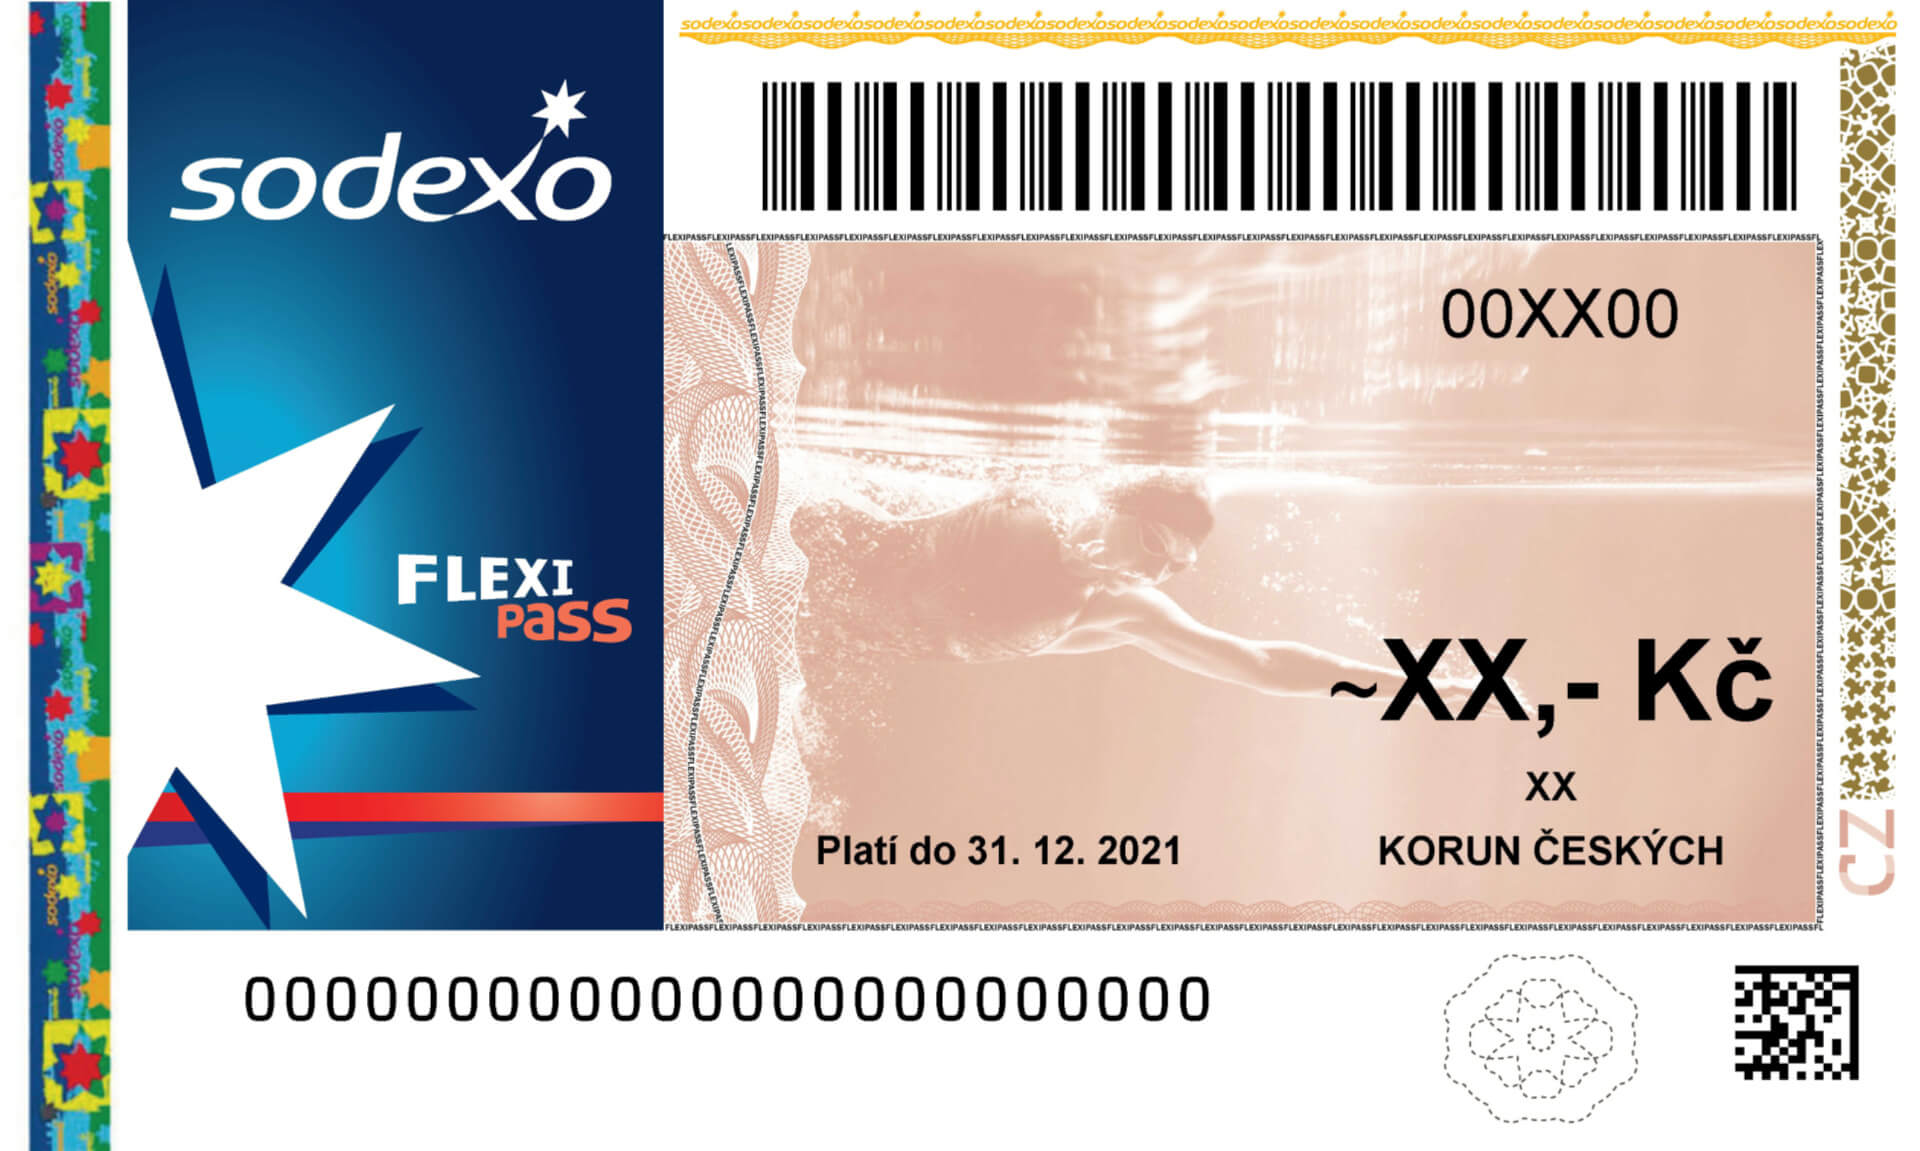 poukážka flexi pass